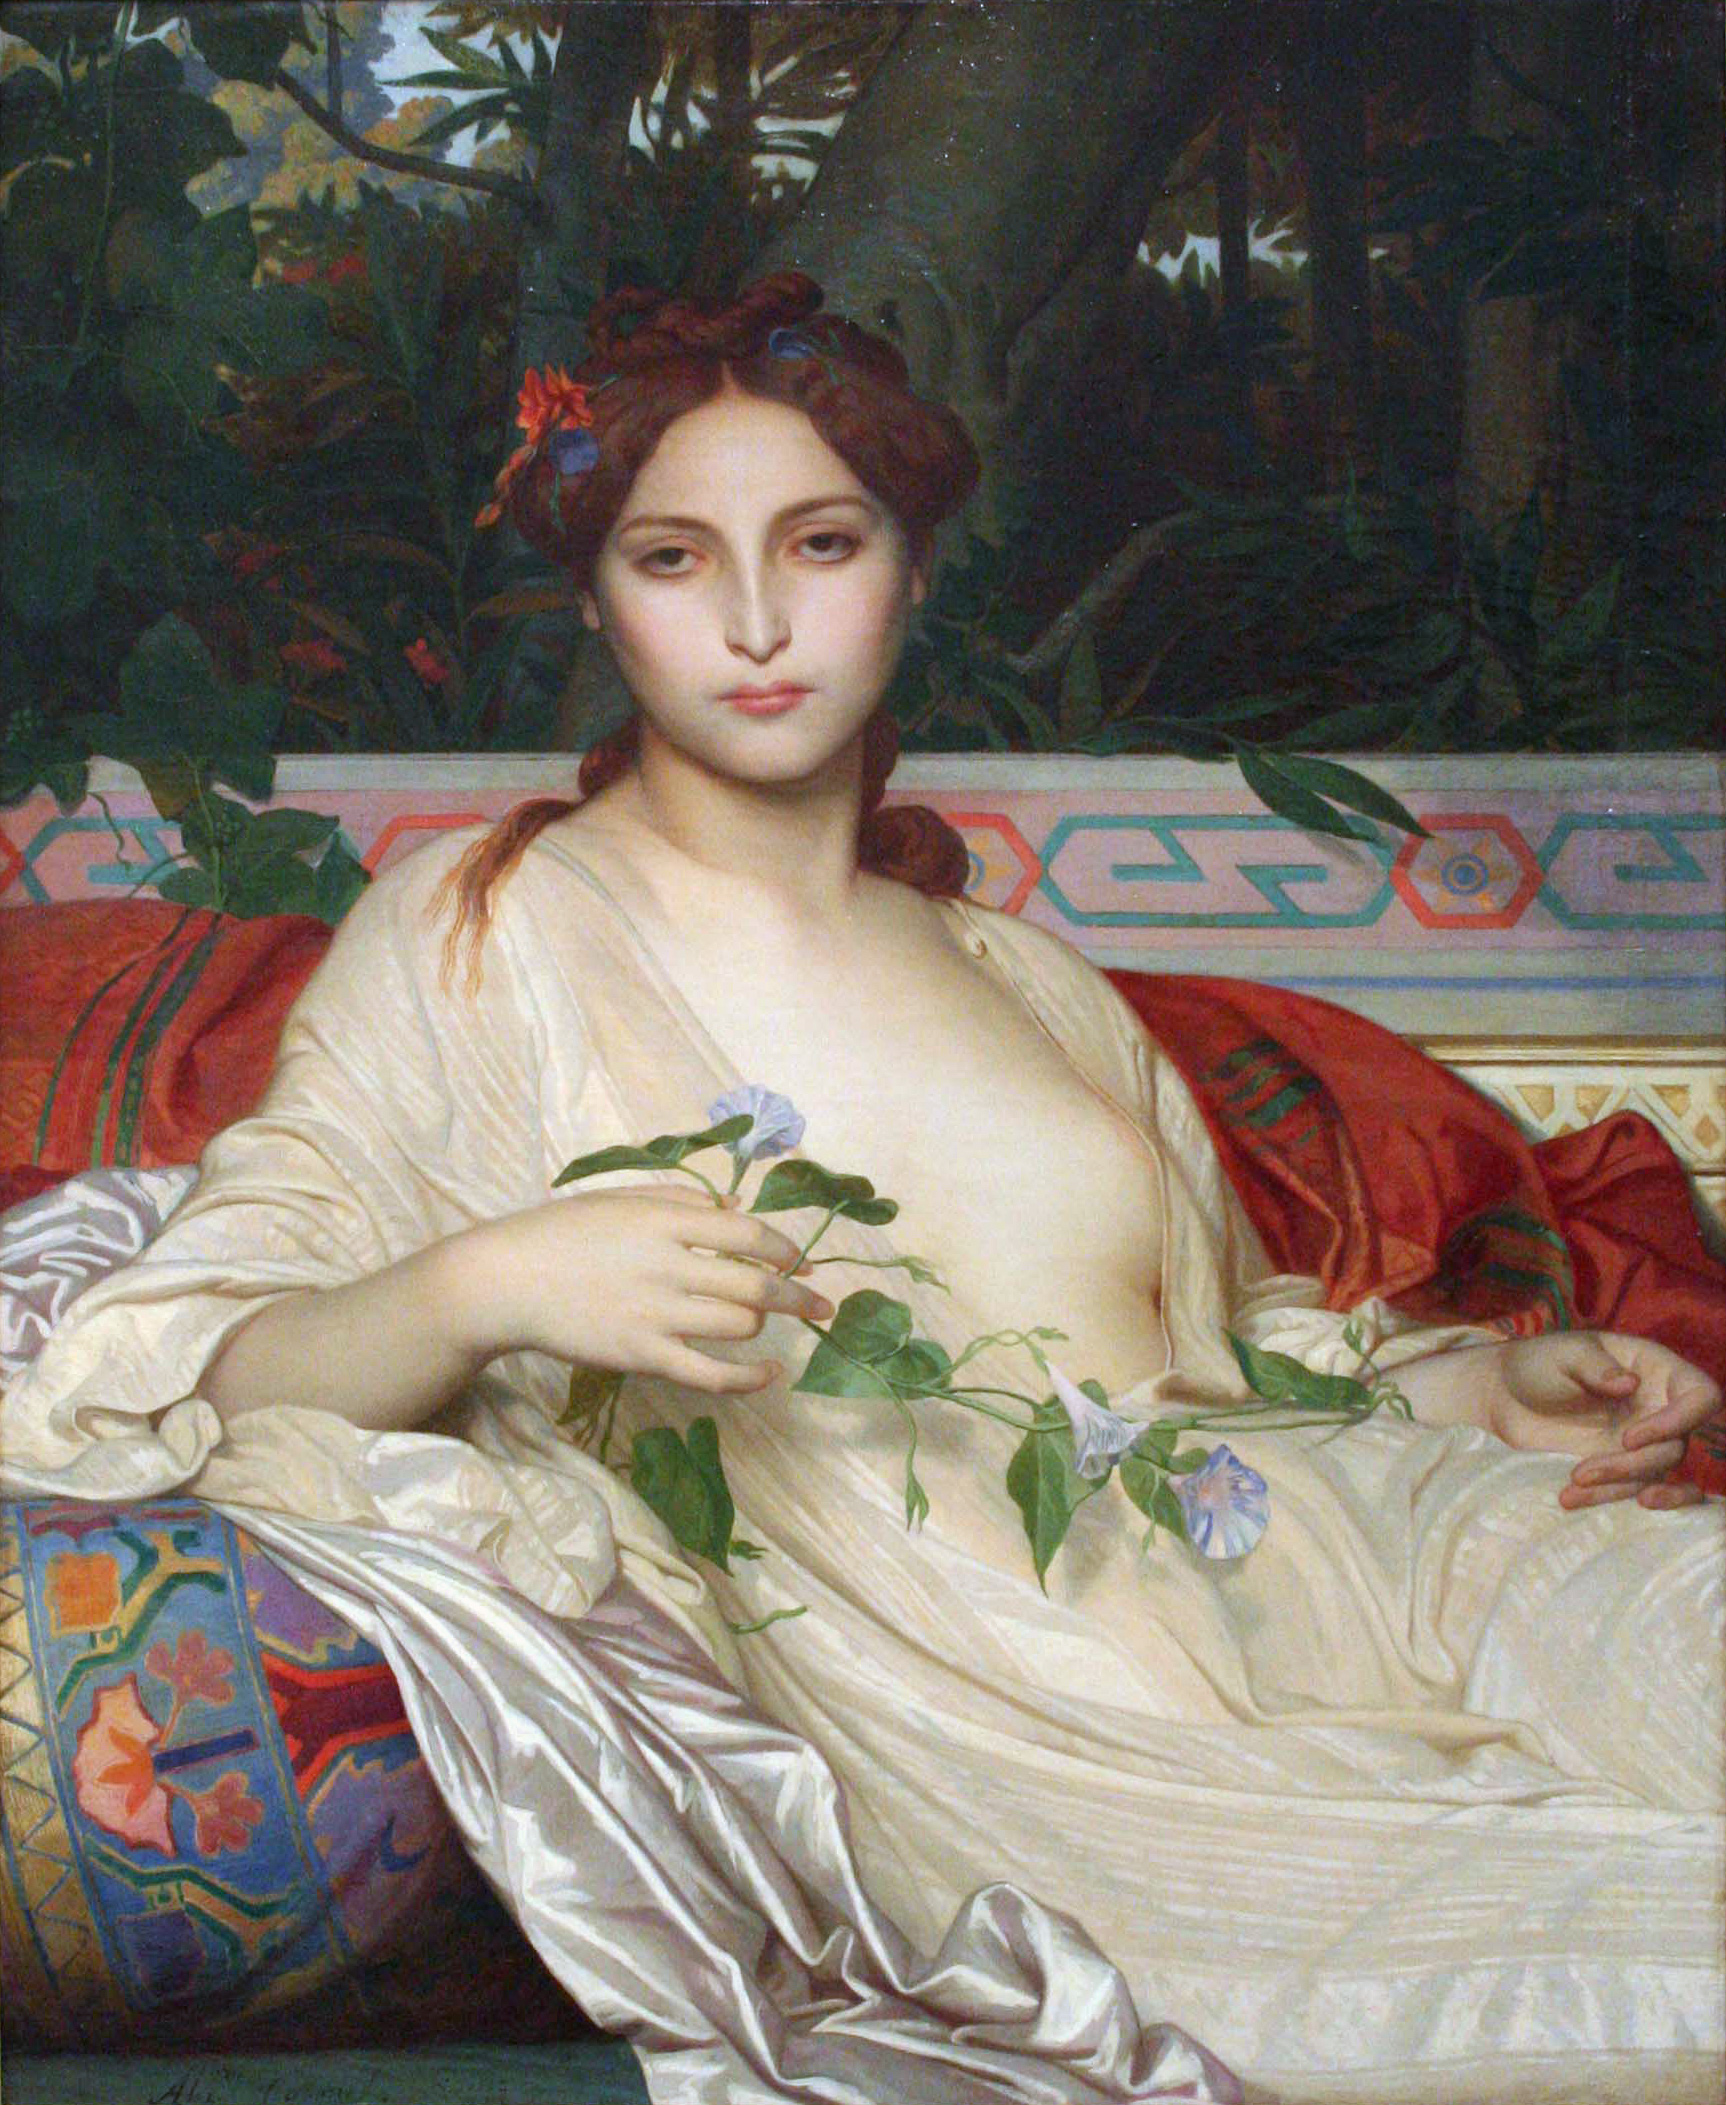 阿尔贝黛 by Alexandre Cabanel - 1848 - 98.0 x 80.0 cm 